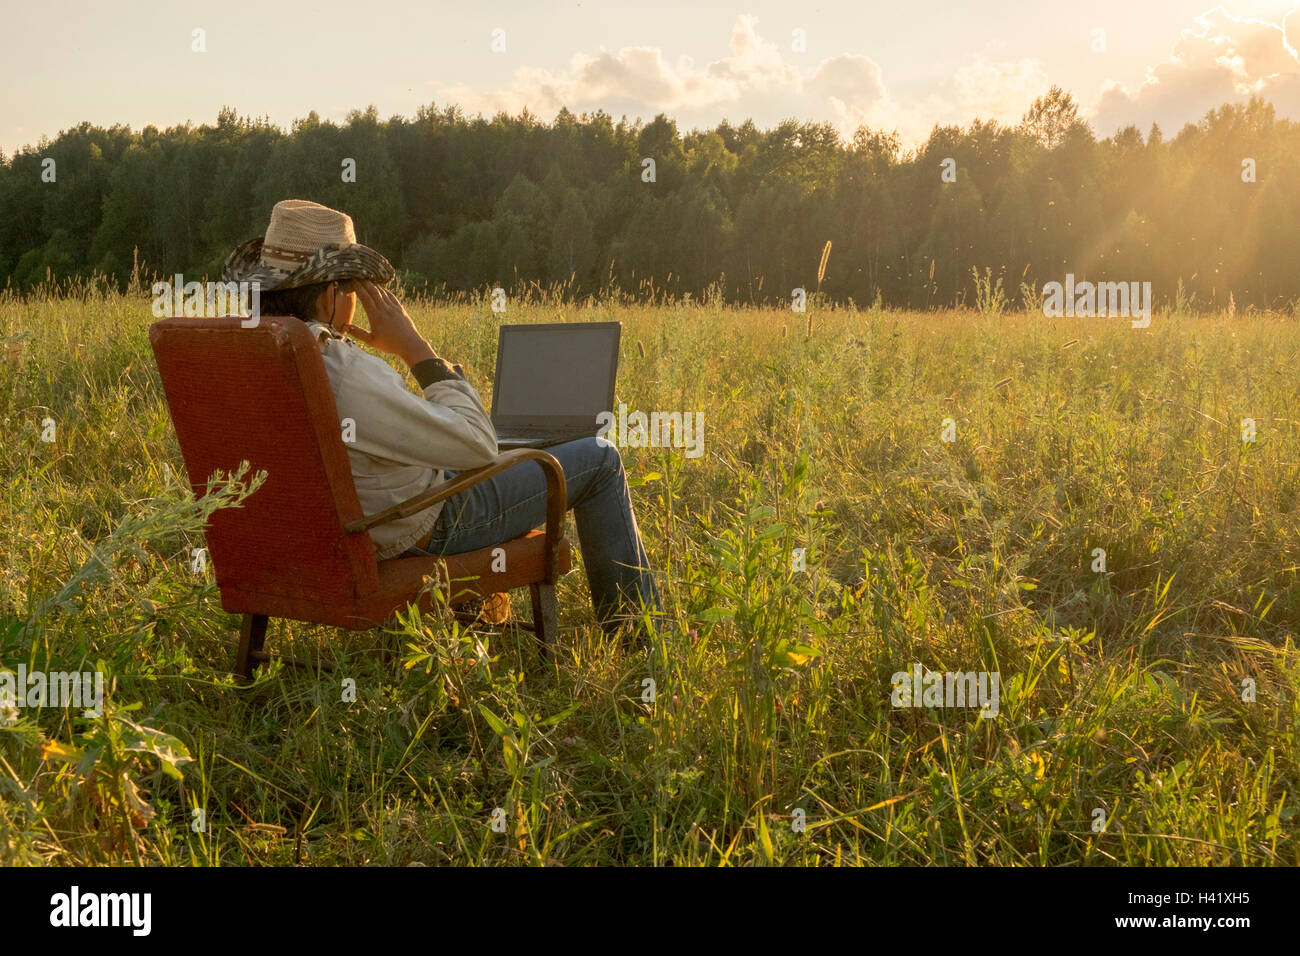 Mari man sitting on chair in field using laptop Stock Photo